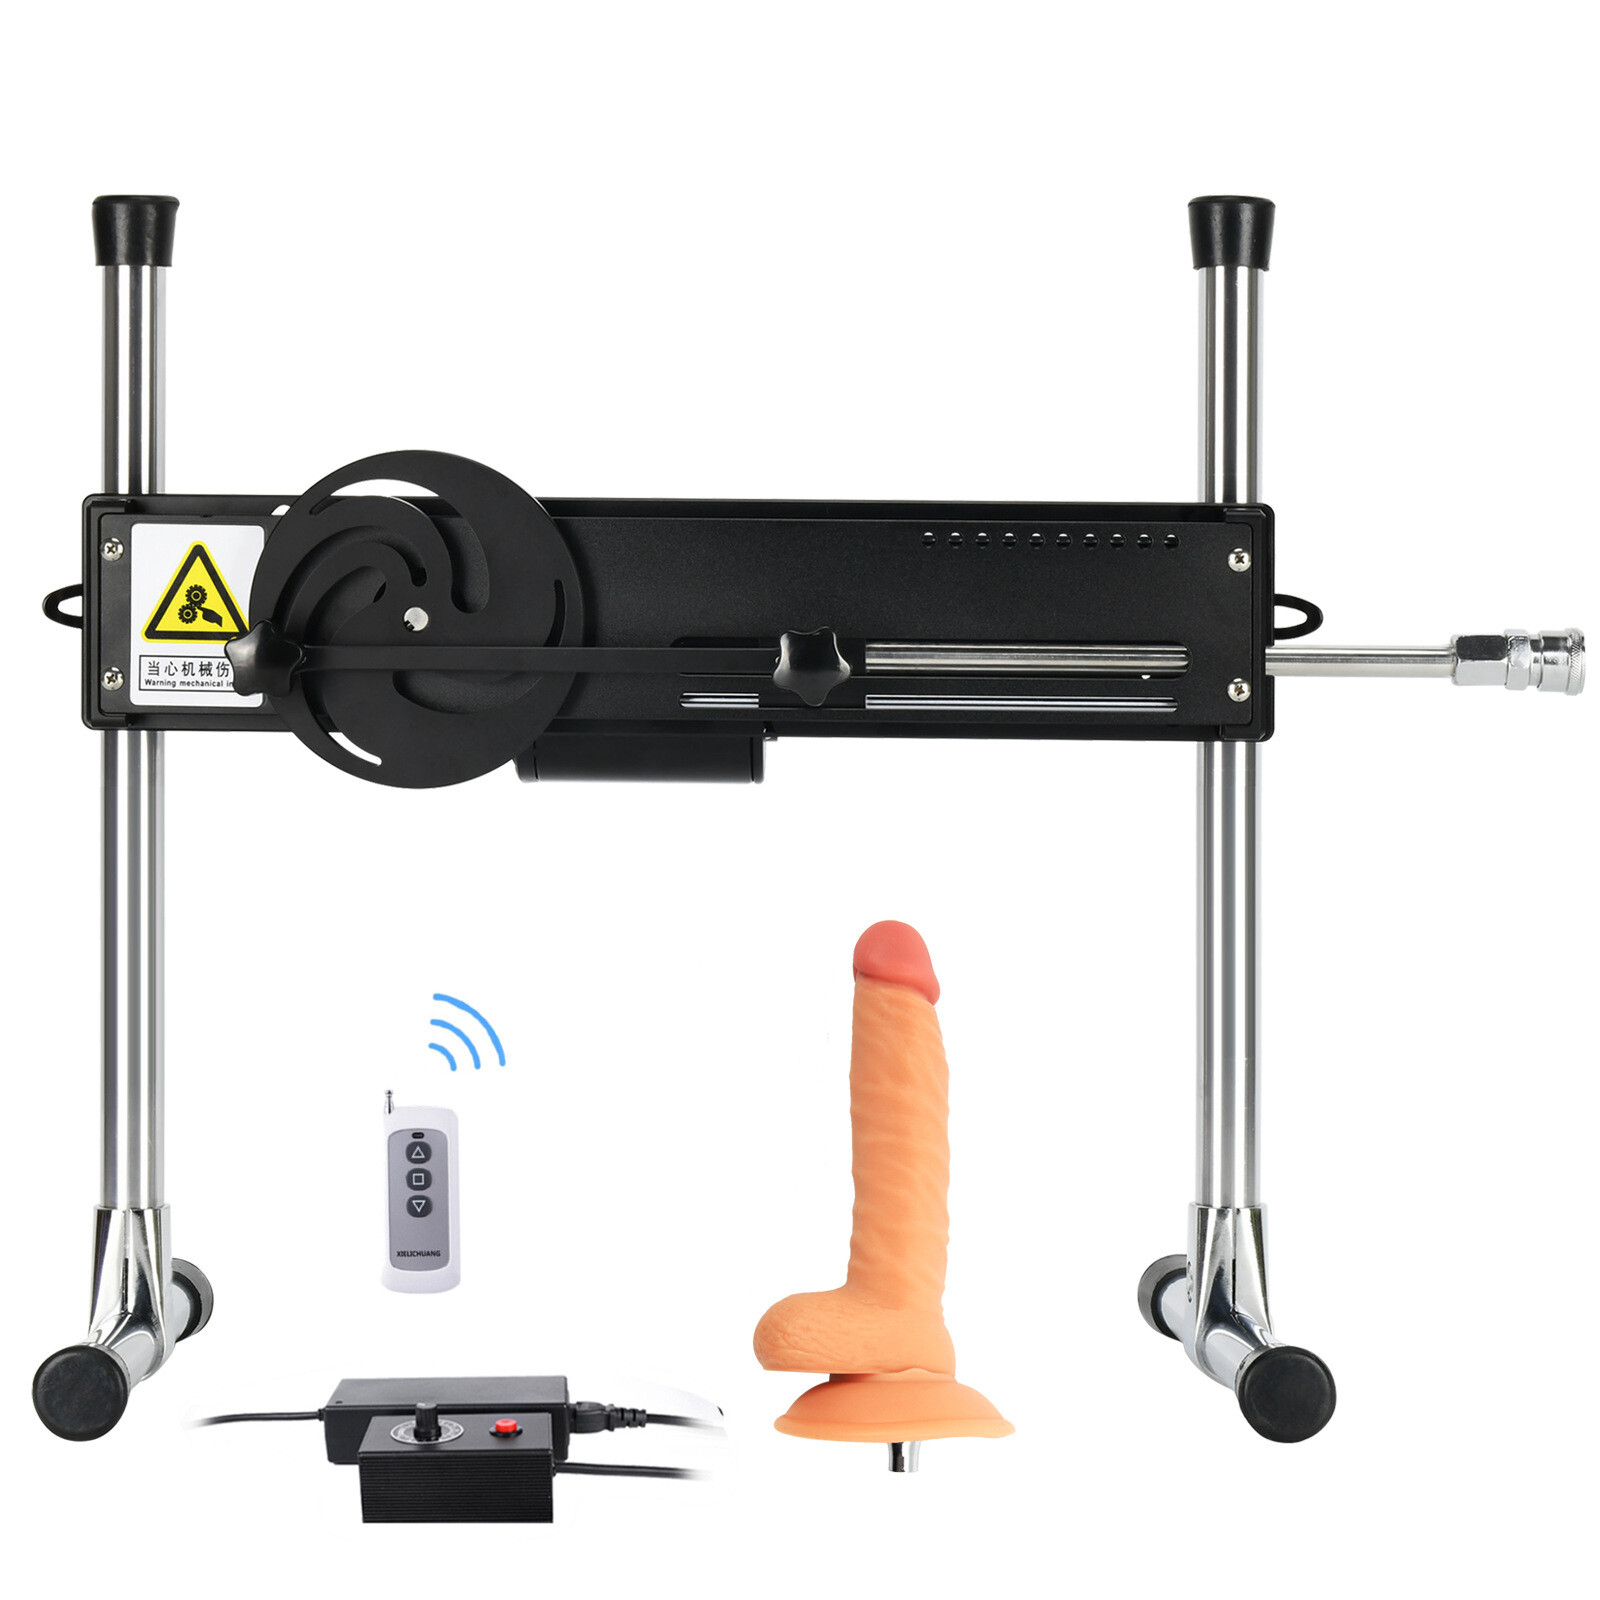 Jesskylove Sex Machine Adjustable With 4 Pcs Dildos Vac-u-lock Attachments For Women